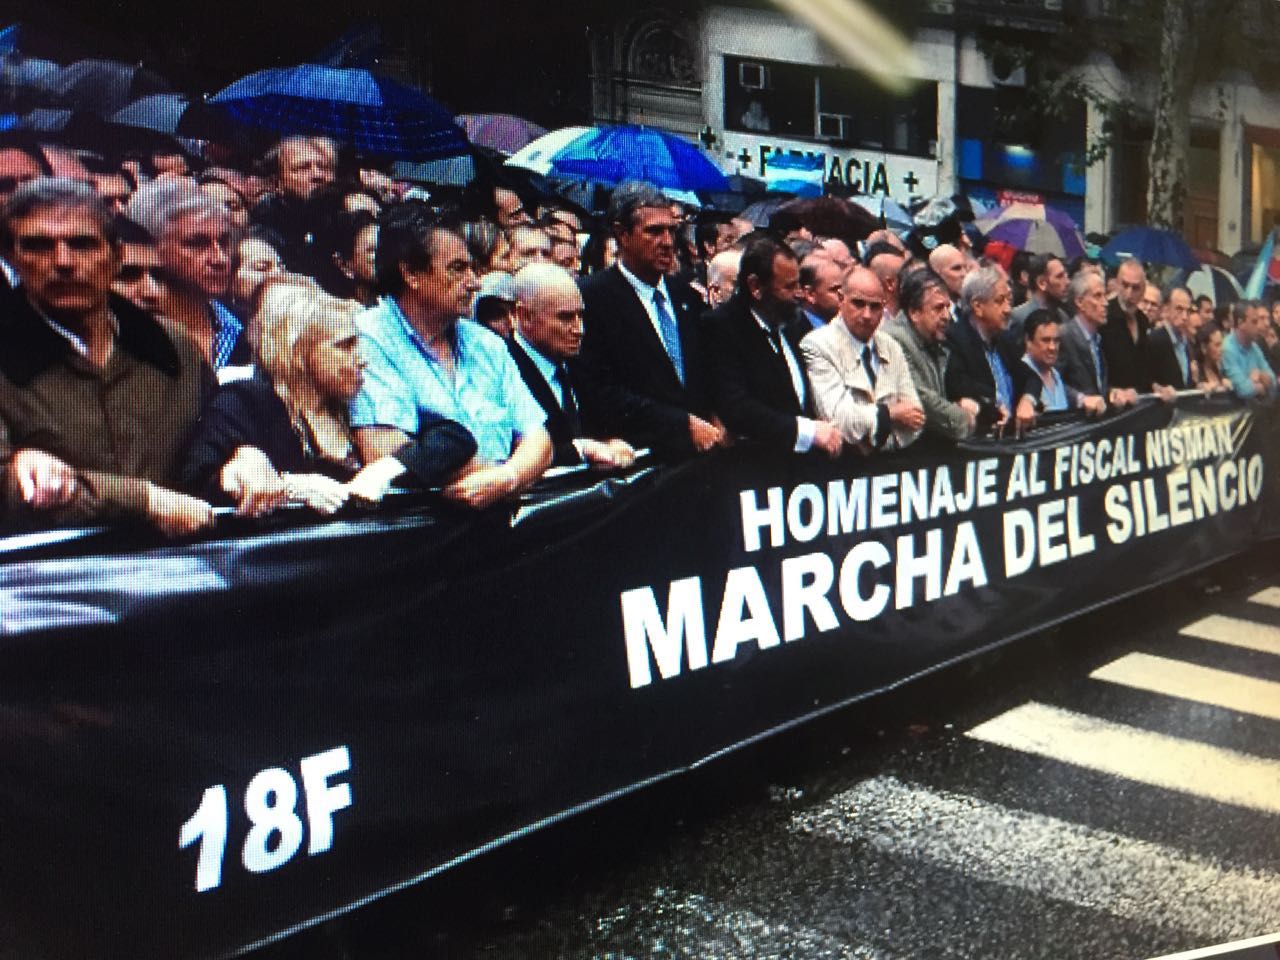 Marcha en homenaje al fiscal Nisman, Buenos Aires, 2016. Foto: Justicia2020/ CC BY-SA 4.0 Wikimedia Commons.